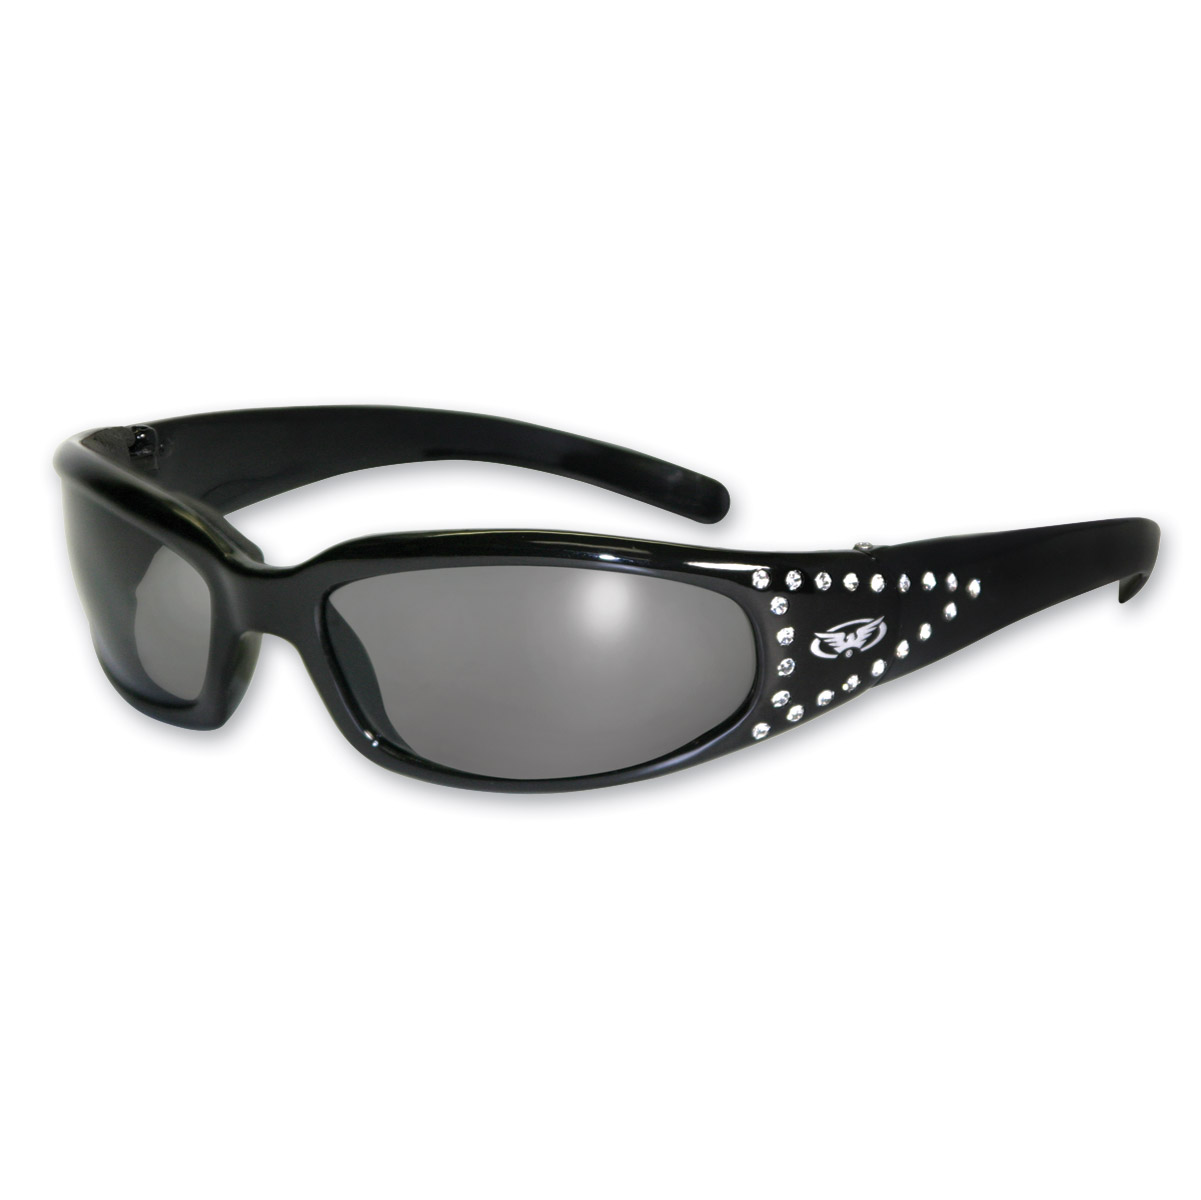 Global Vision Eyewear Marilyn 3 24 Black Photochromatic Sunglasses with – 2nd Amendment Cycles